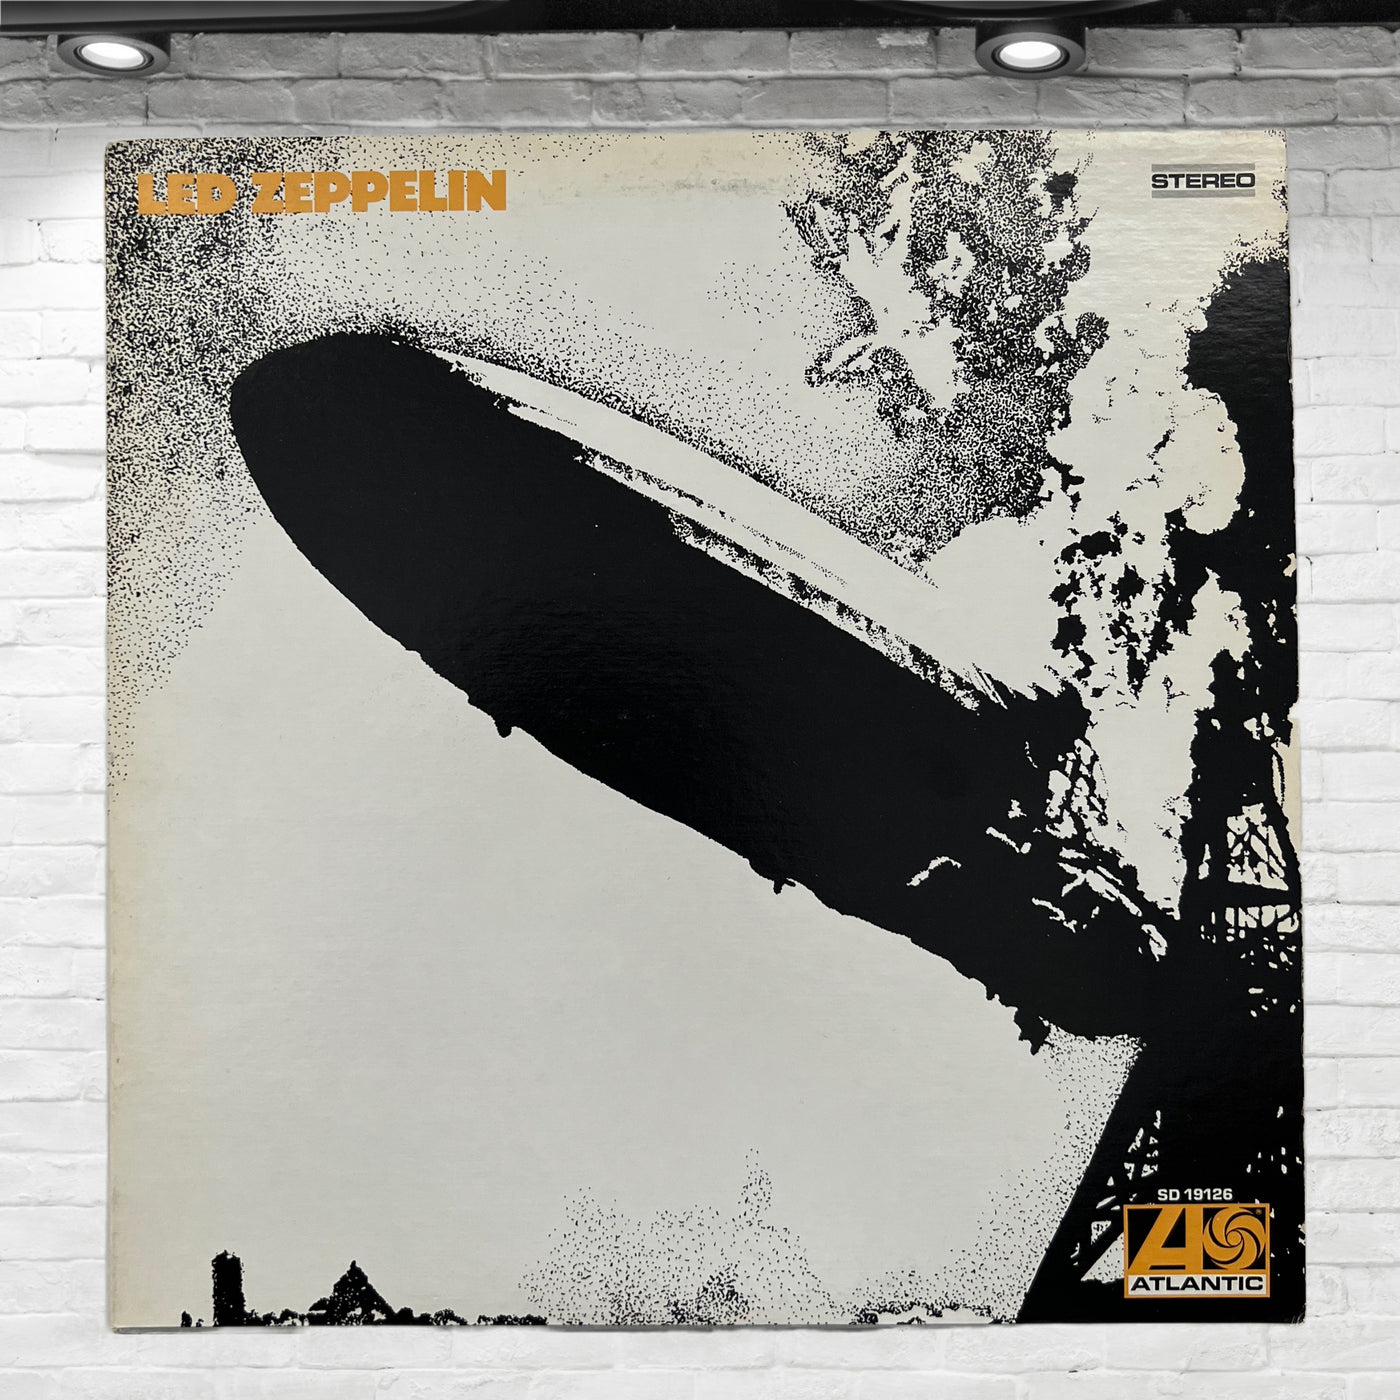 Vintage Original Led Zeppelin I Self Titled vinyl Album Atlantic SD-19126